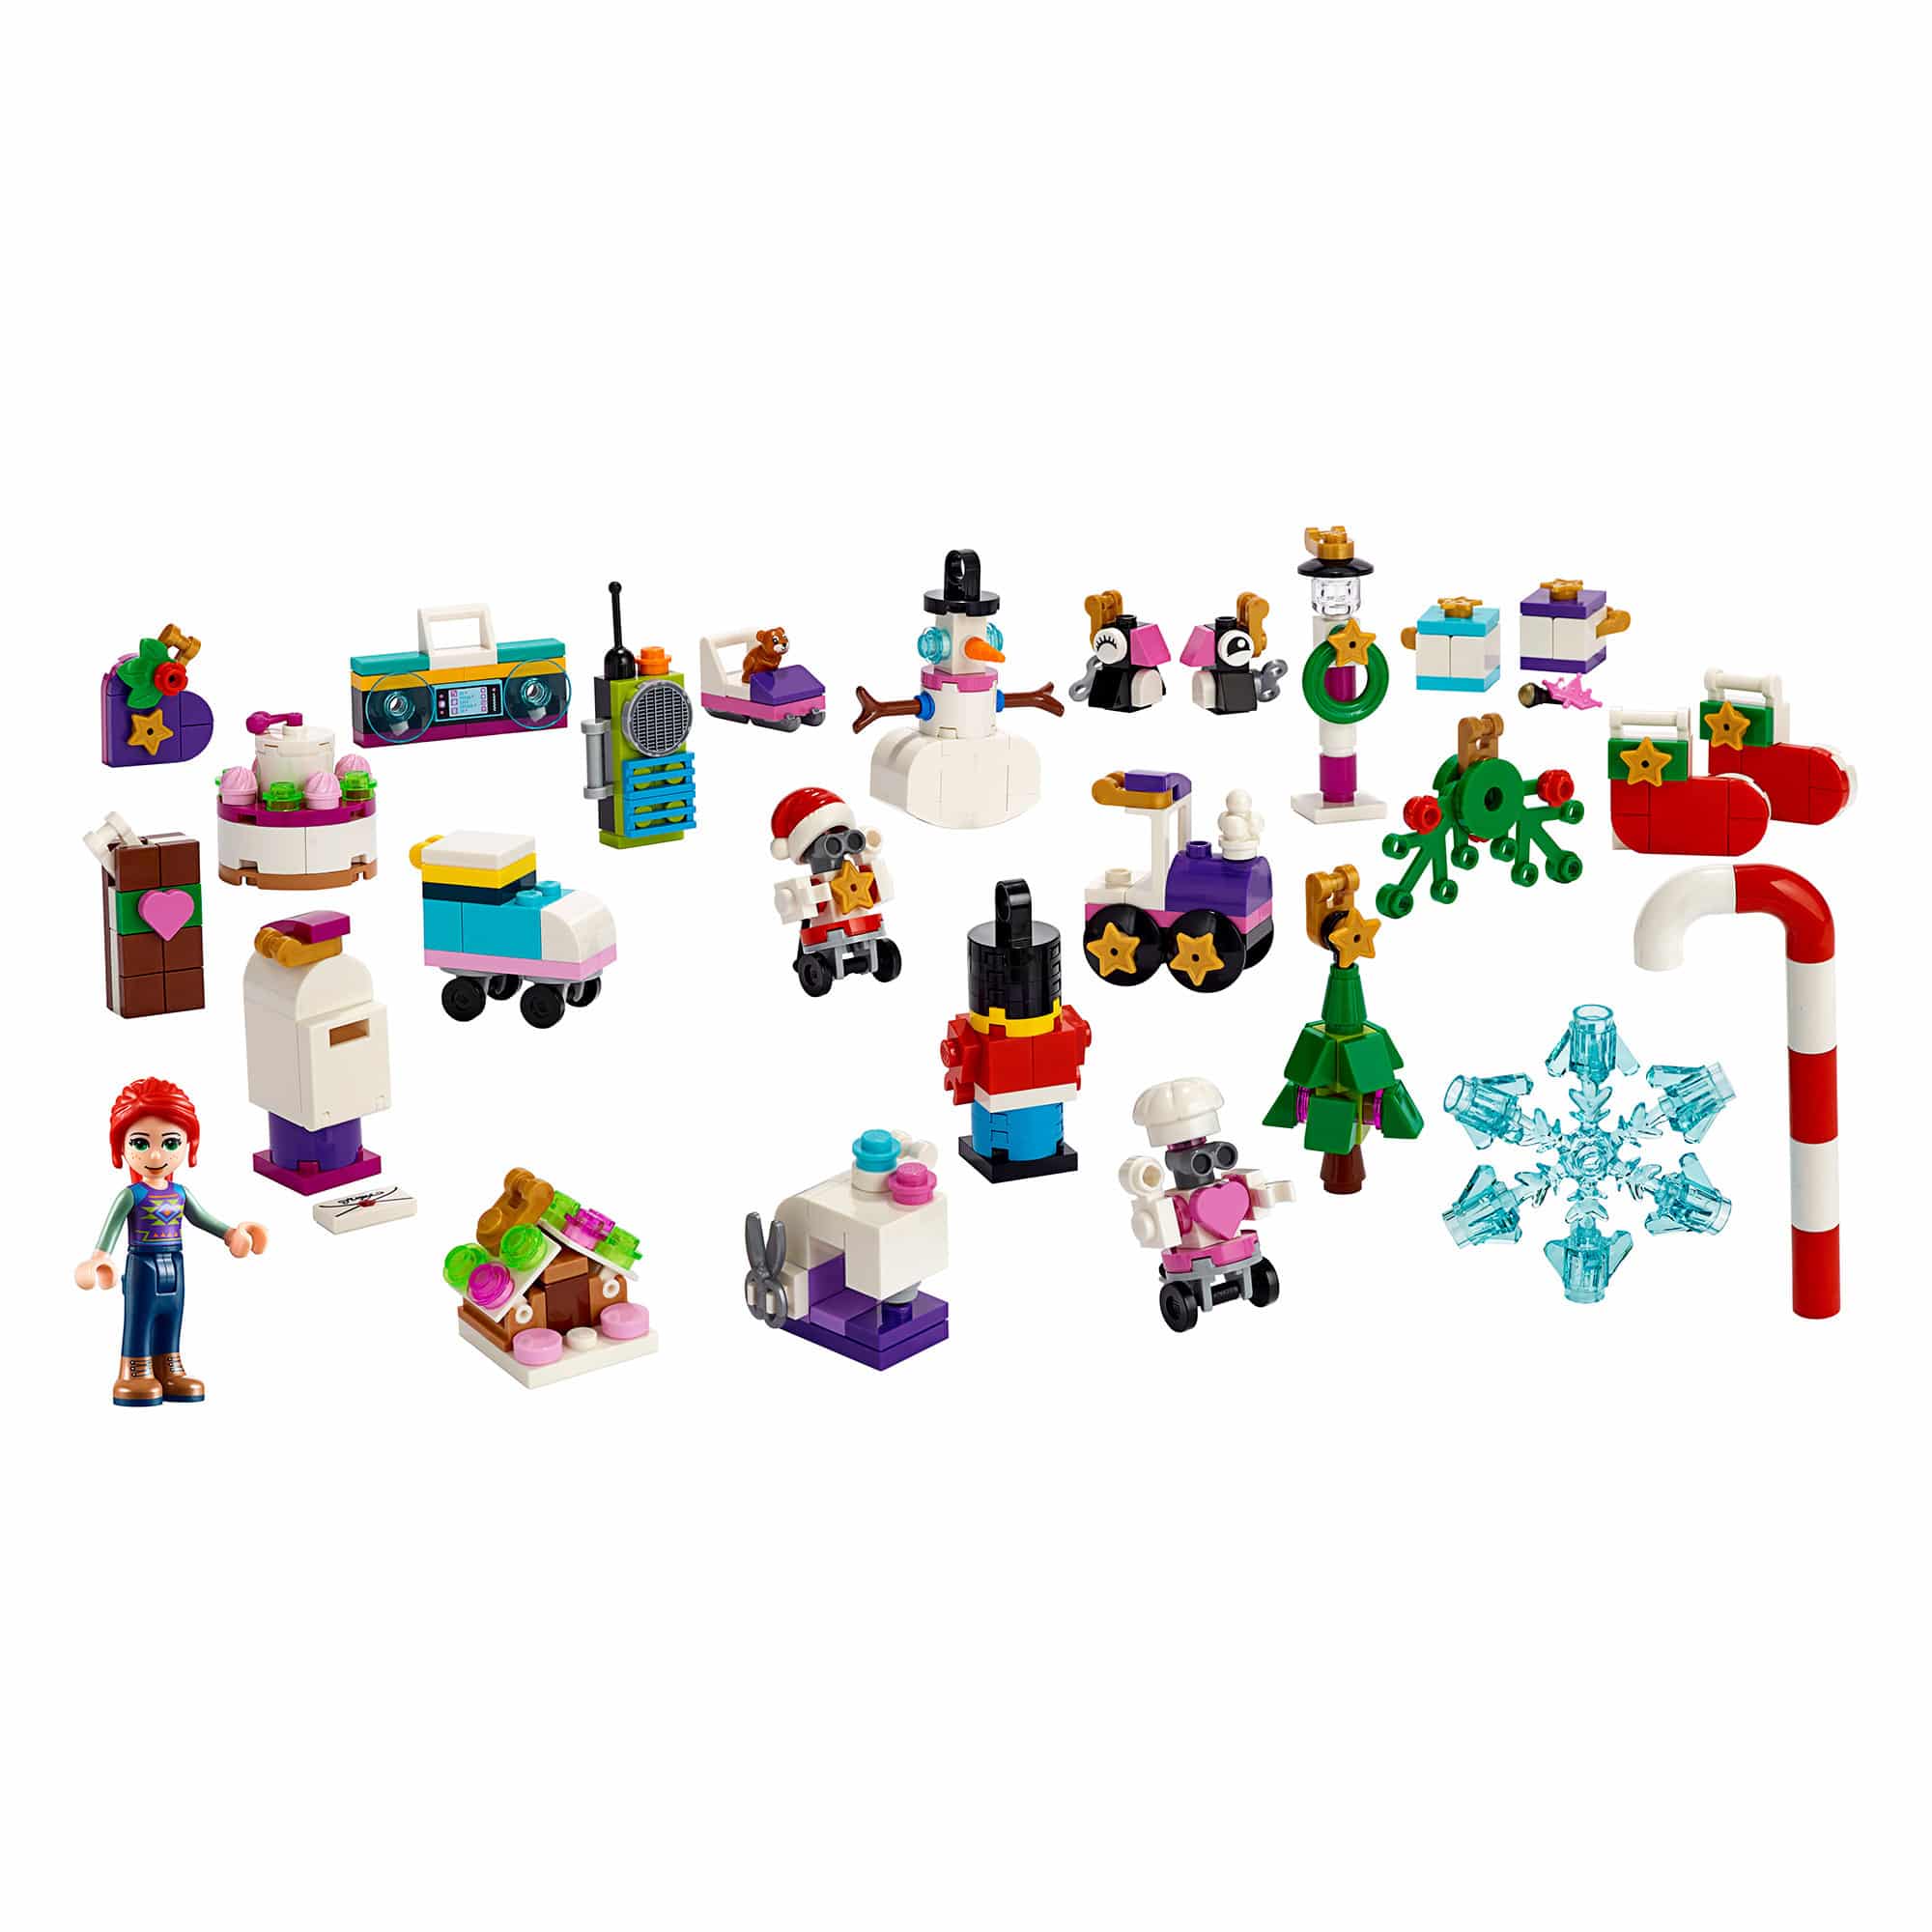 LEGO Friends 41382 - Advent Calendar